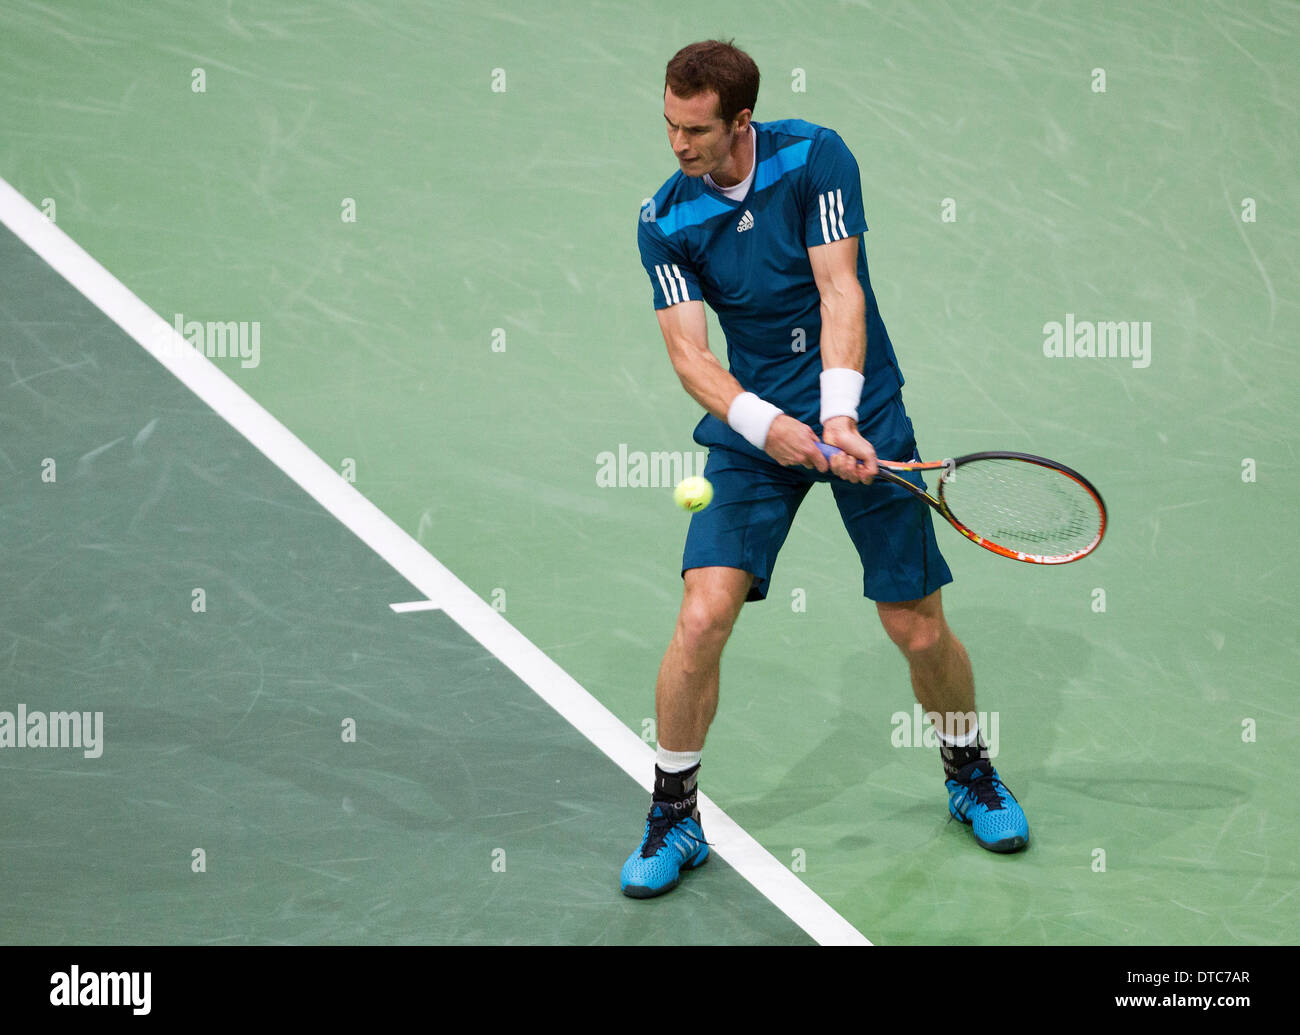 Rotterdam, aux Pays-Bas. Feb 14, 2014. ABN AMRO World Tennis Tournament Andy Murray (GRB) dans son match contre Marin Cilic(KRO) Photo:Tennisimages/Henk Koster/Alamy Live News Banque D'Images